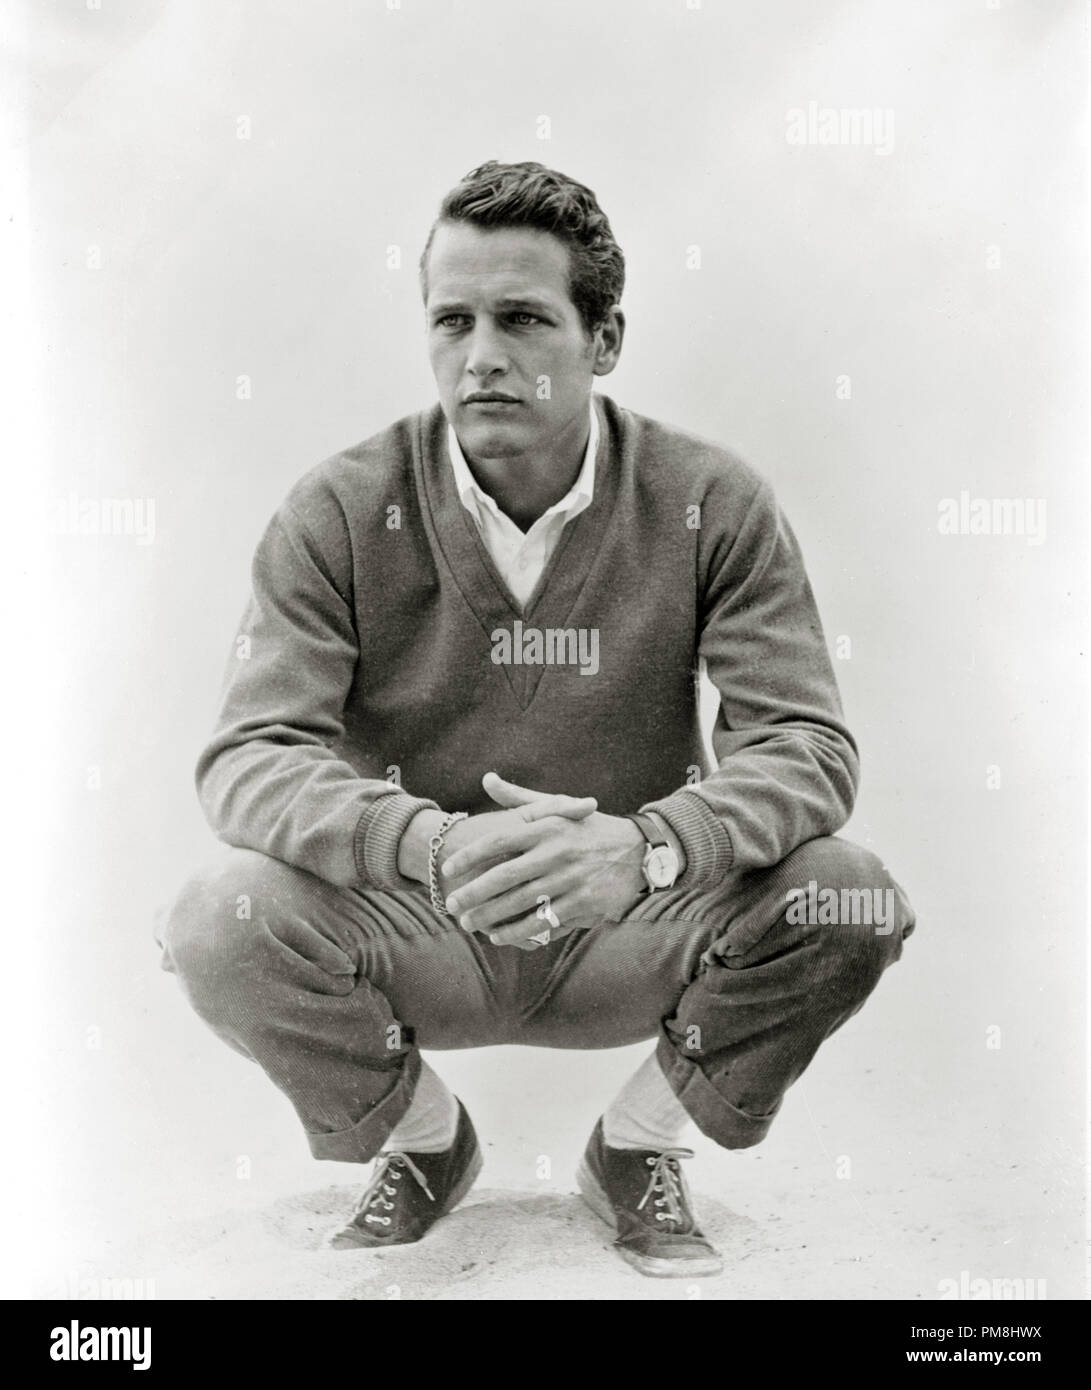 (Archivística Cine Clásico - Paul Newman retrospectiva) Paul Newman, circa 1958. Archivo de referencia # 31510 028tha Foto de stock